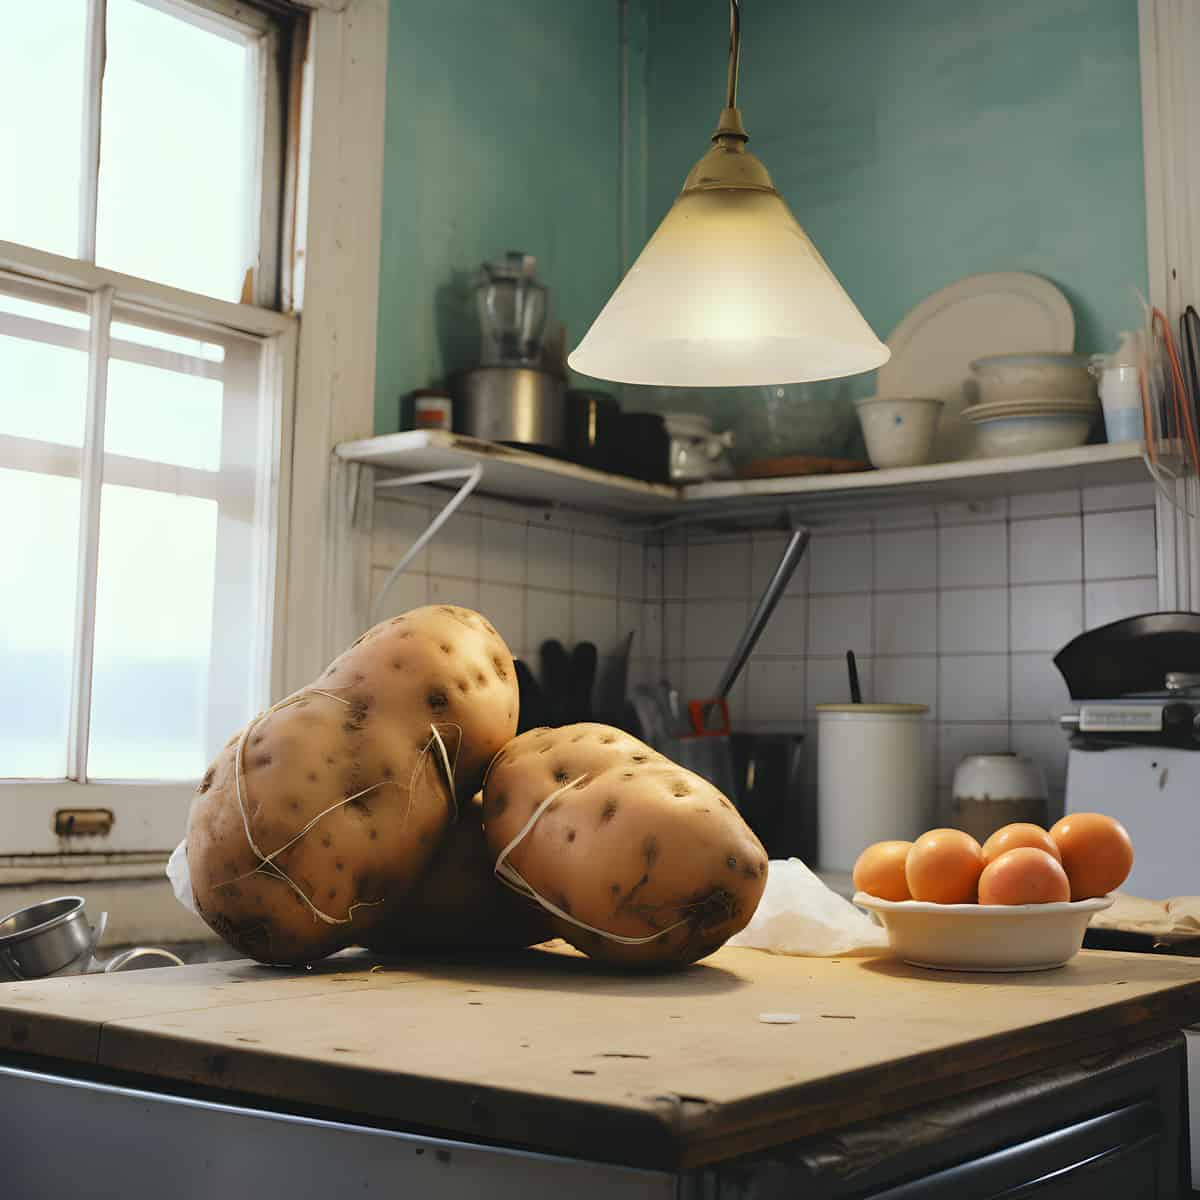 Linda Potatoes on a kitchen counter